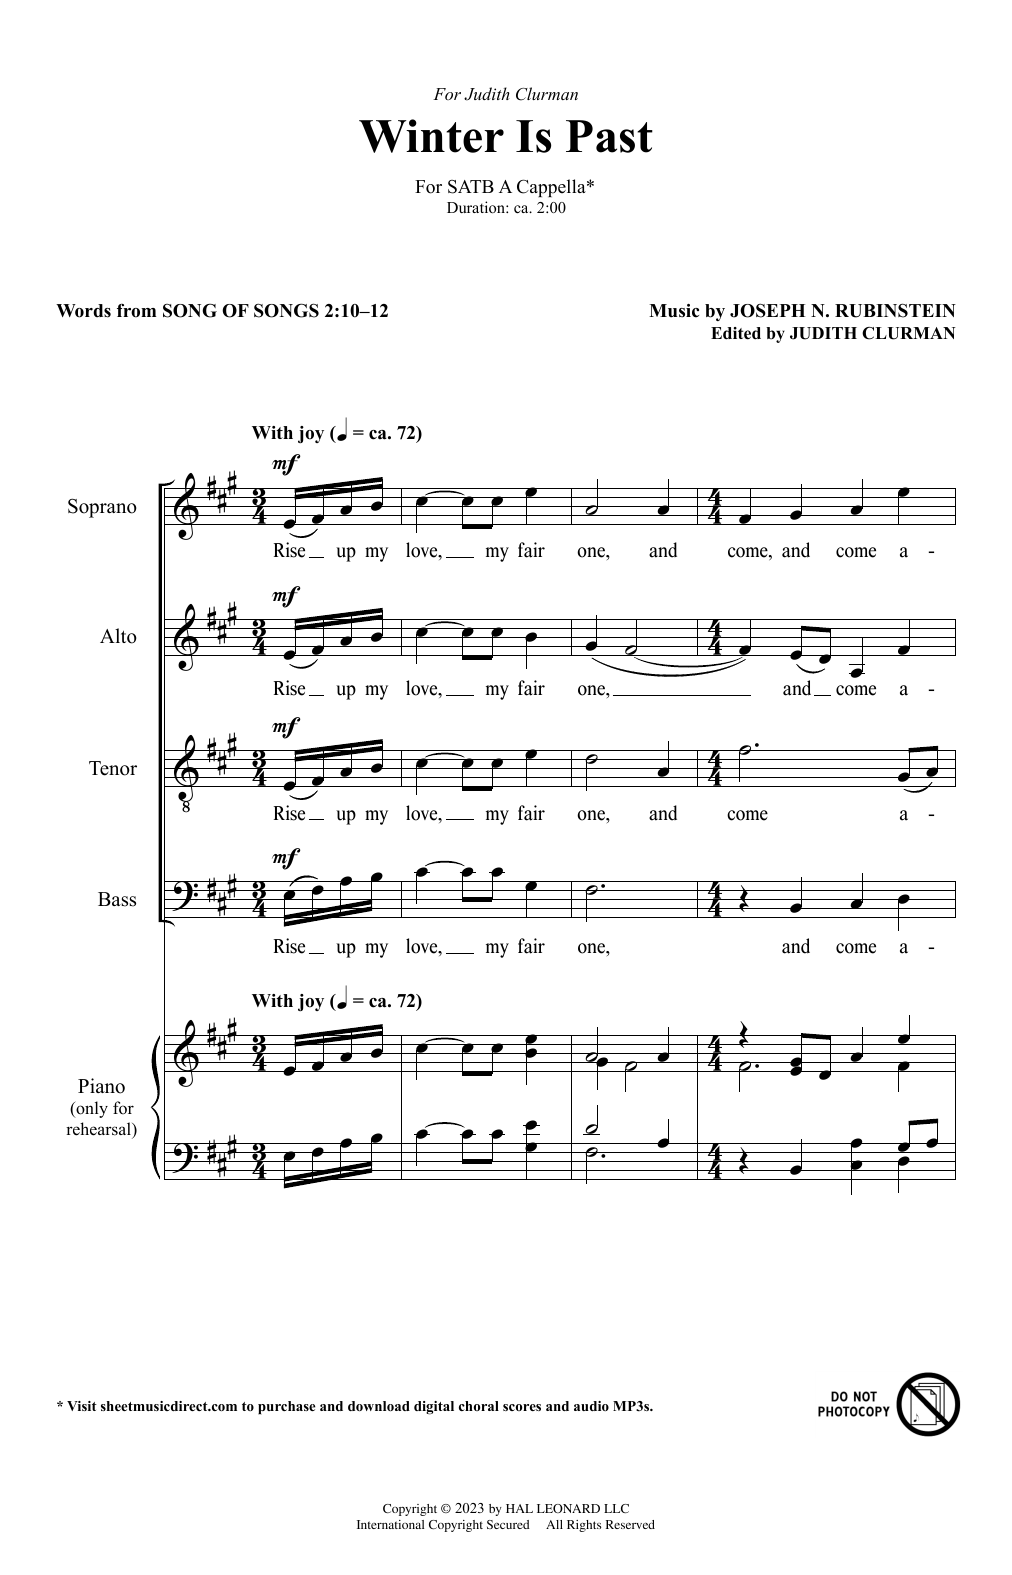 Joseph N. Rubinstein Winter Is Past Sheet Music Notes & Chords for SATB Choir - Download or Print PDF